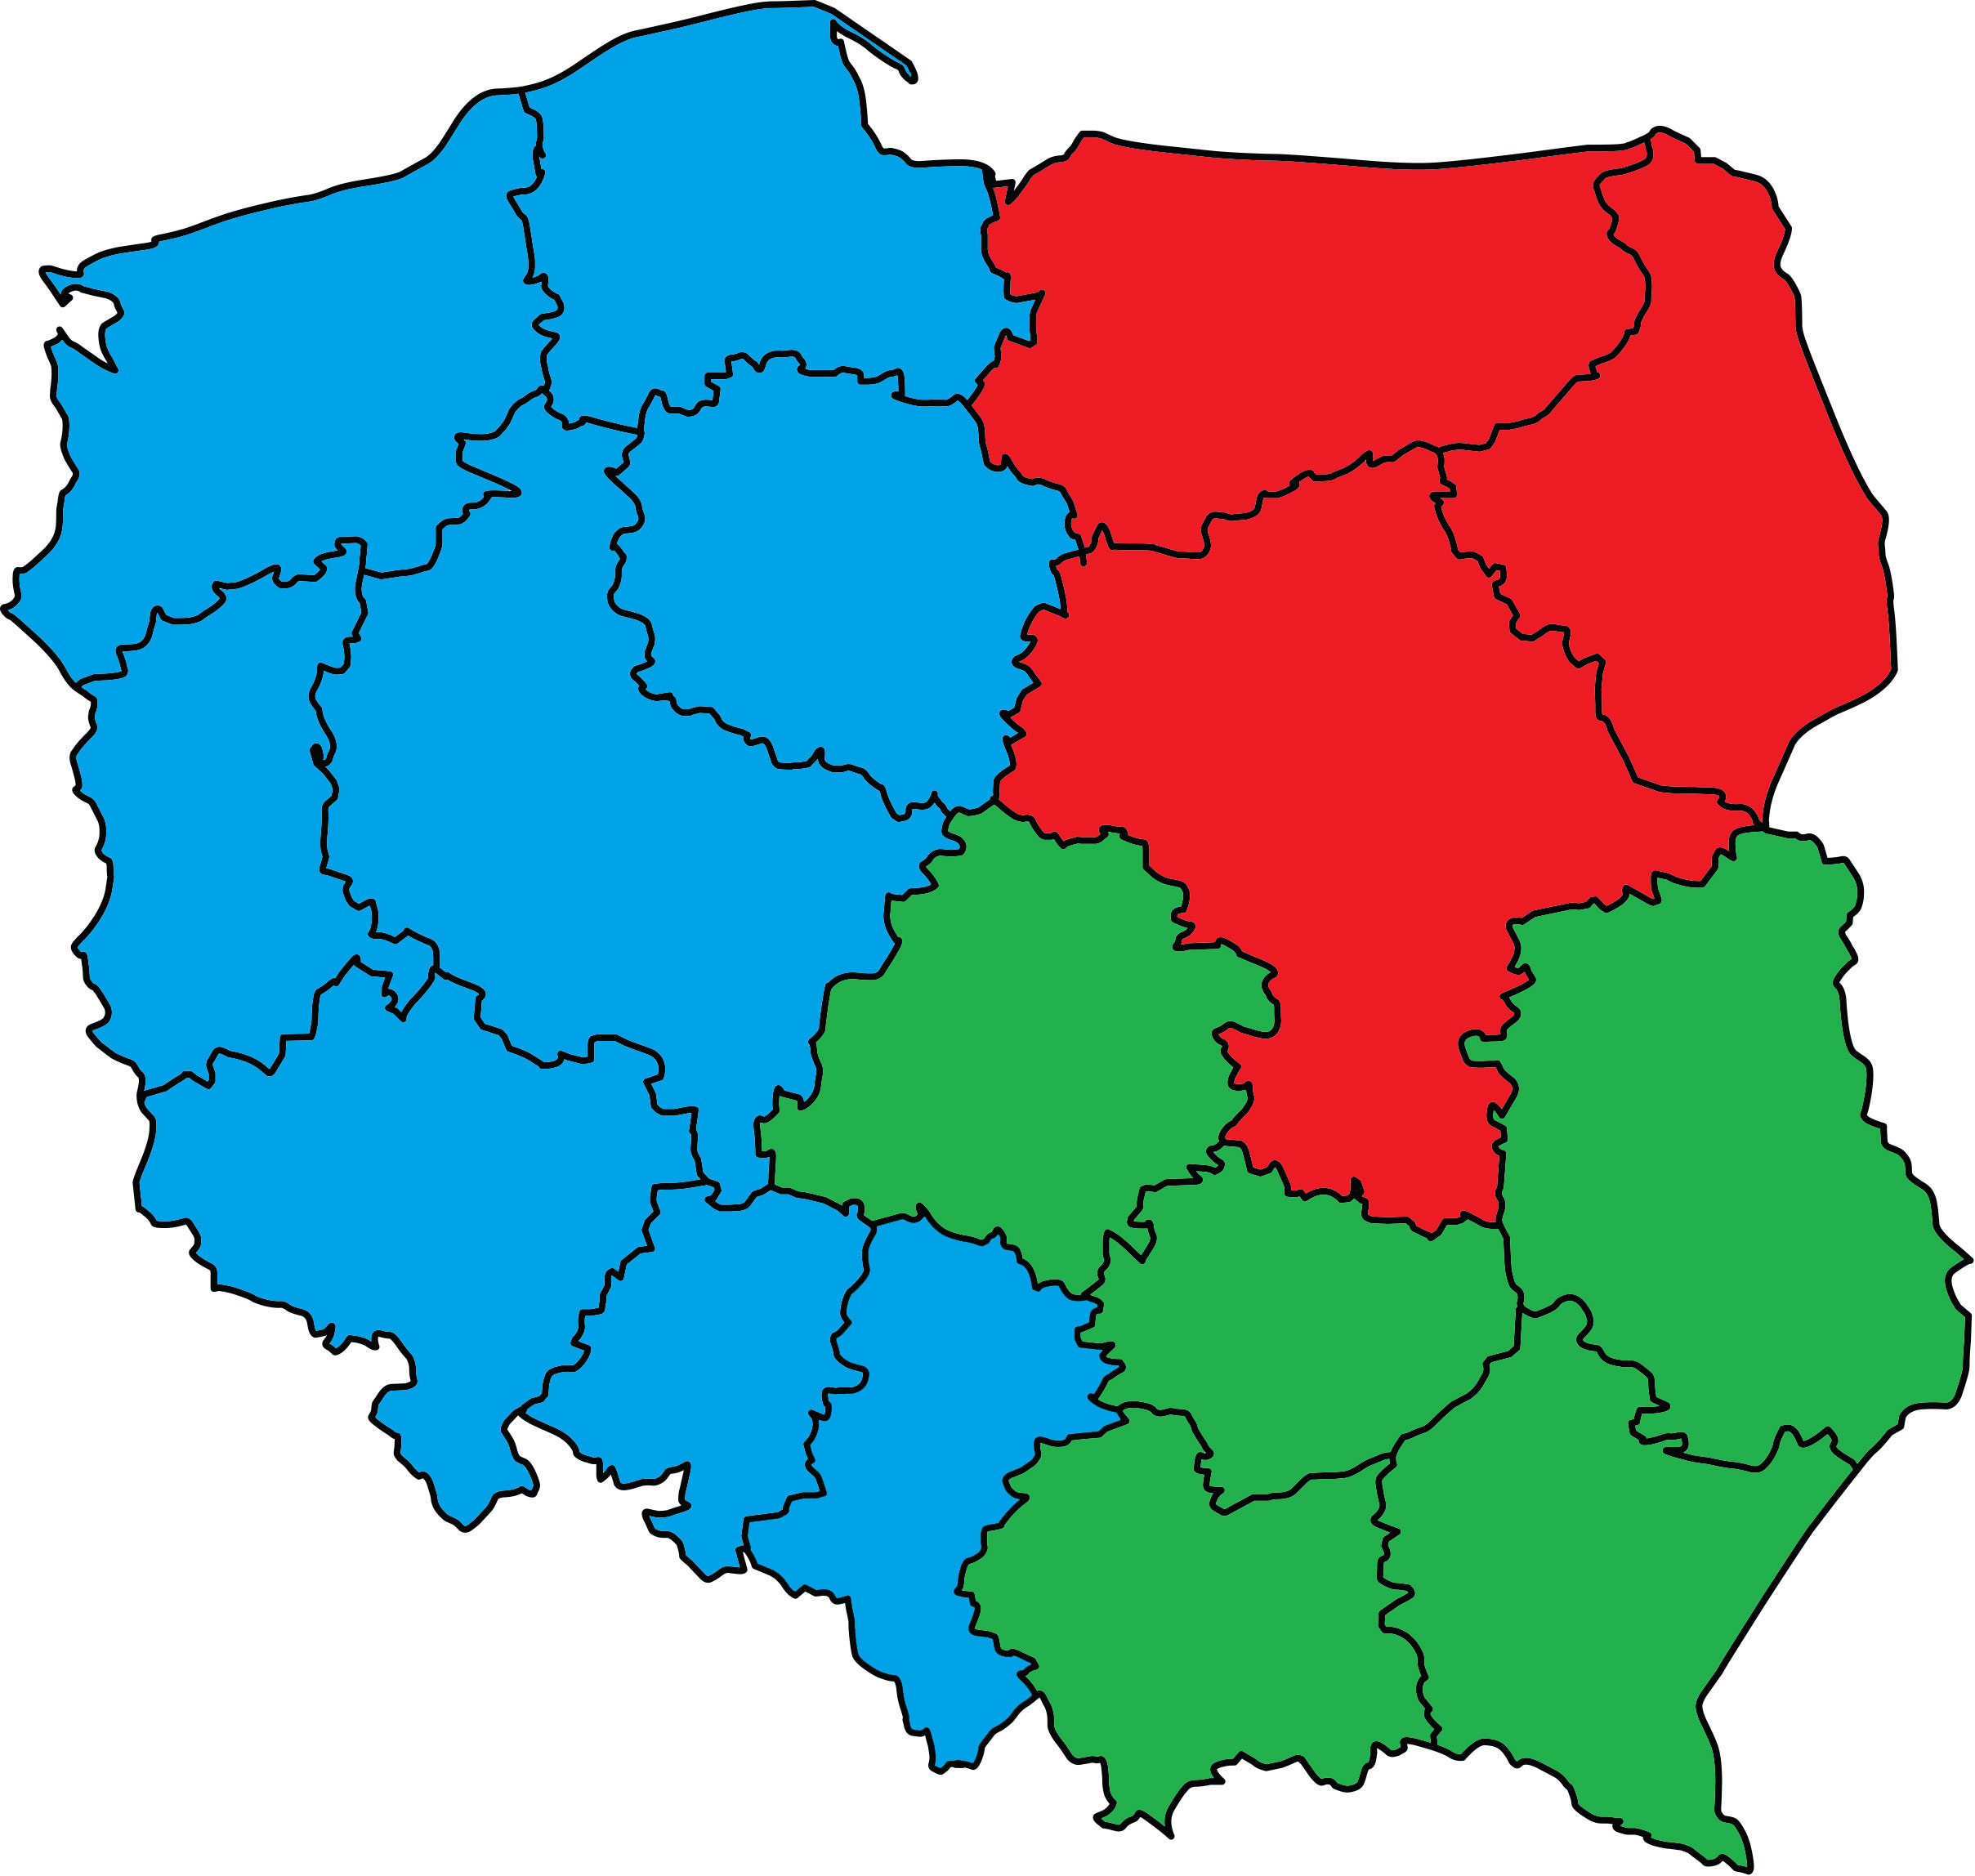 20221206-mapa_polski_handlowcy.jpg(360 KB)